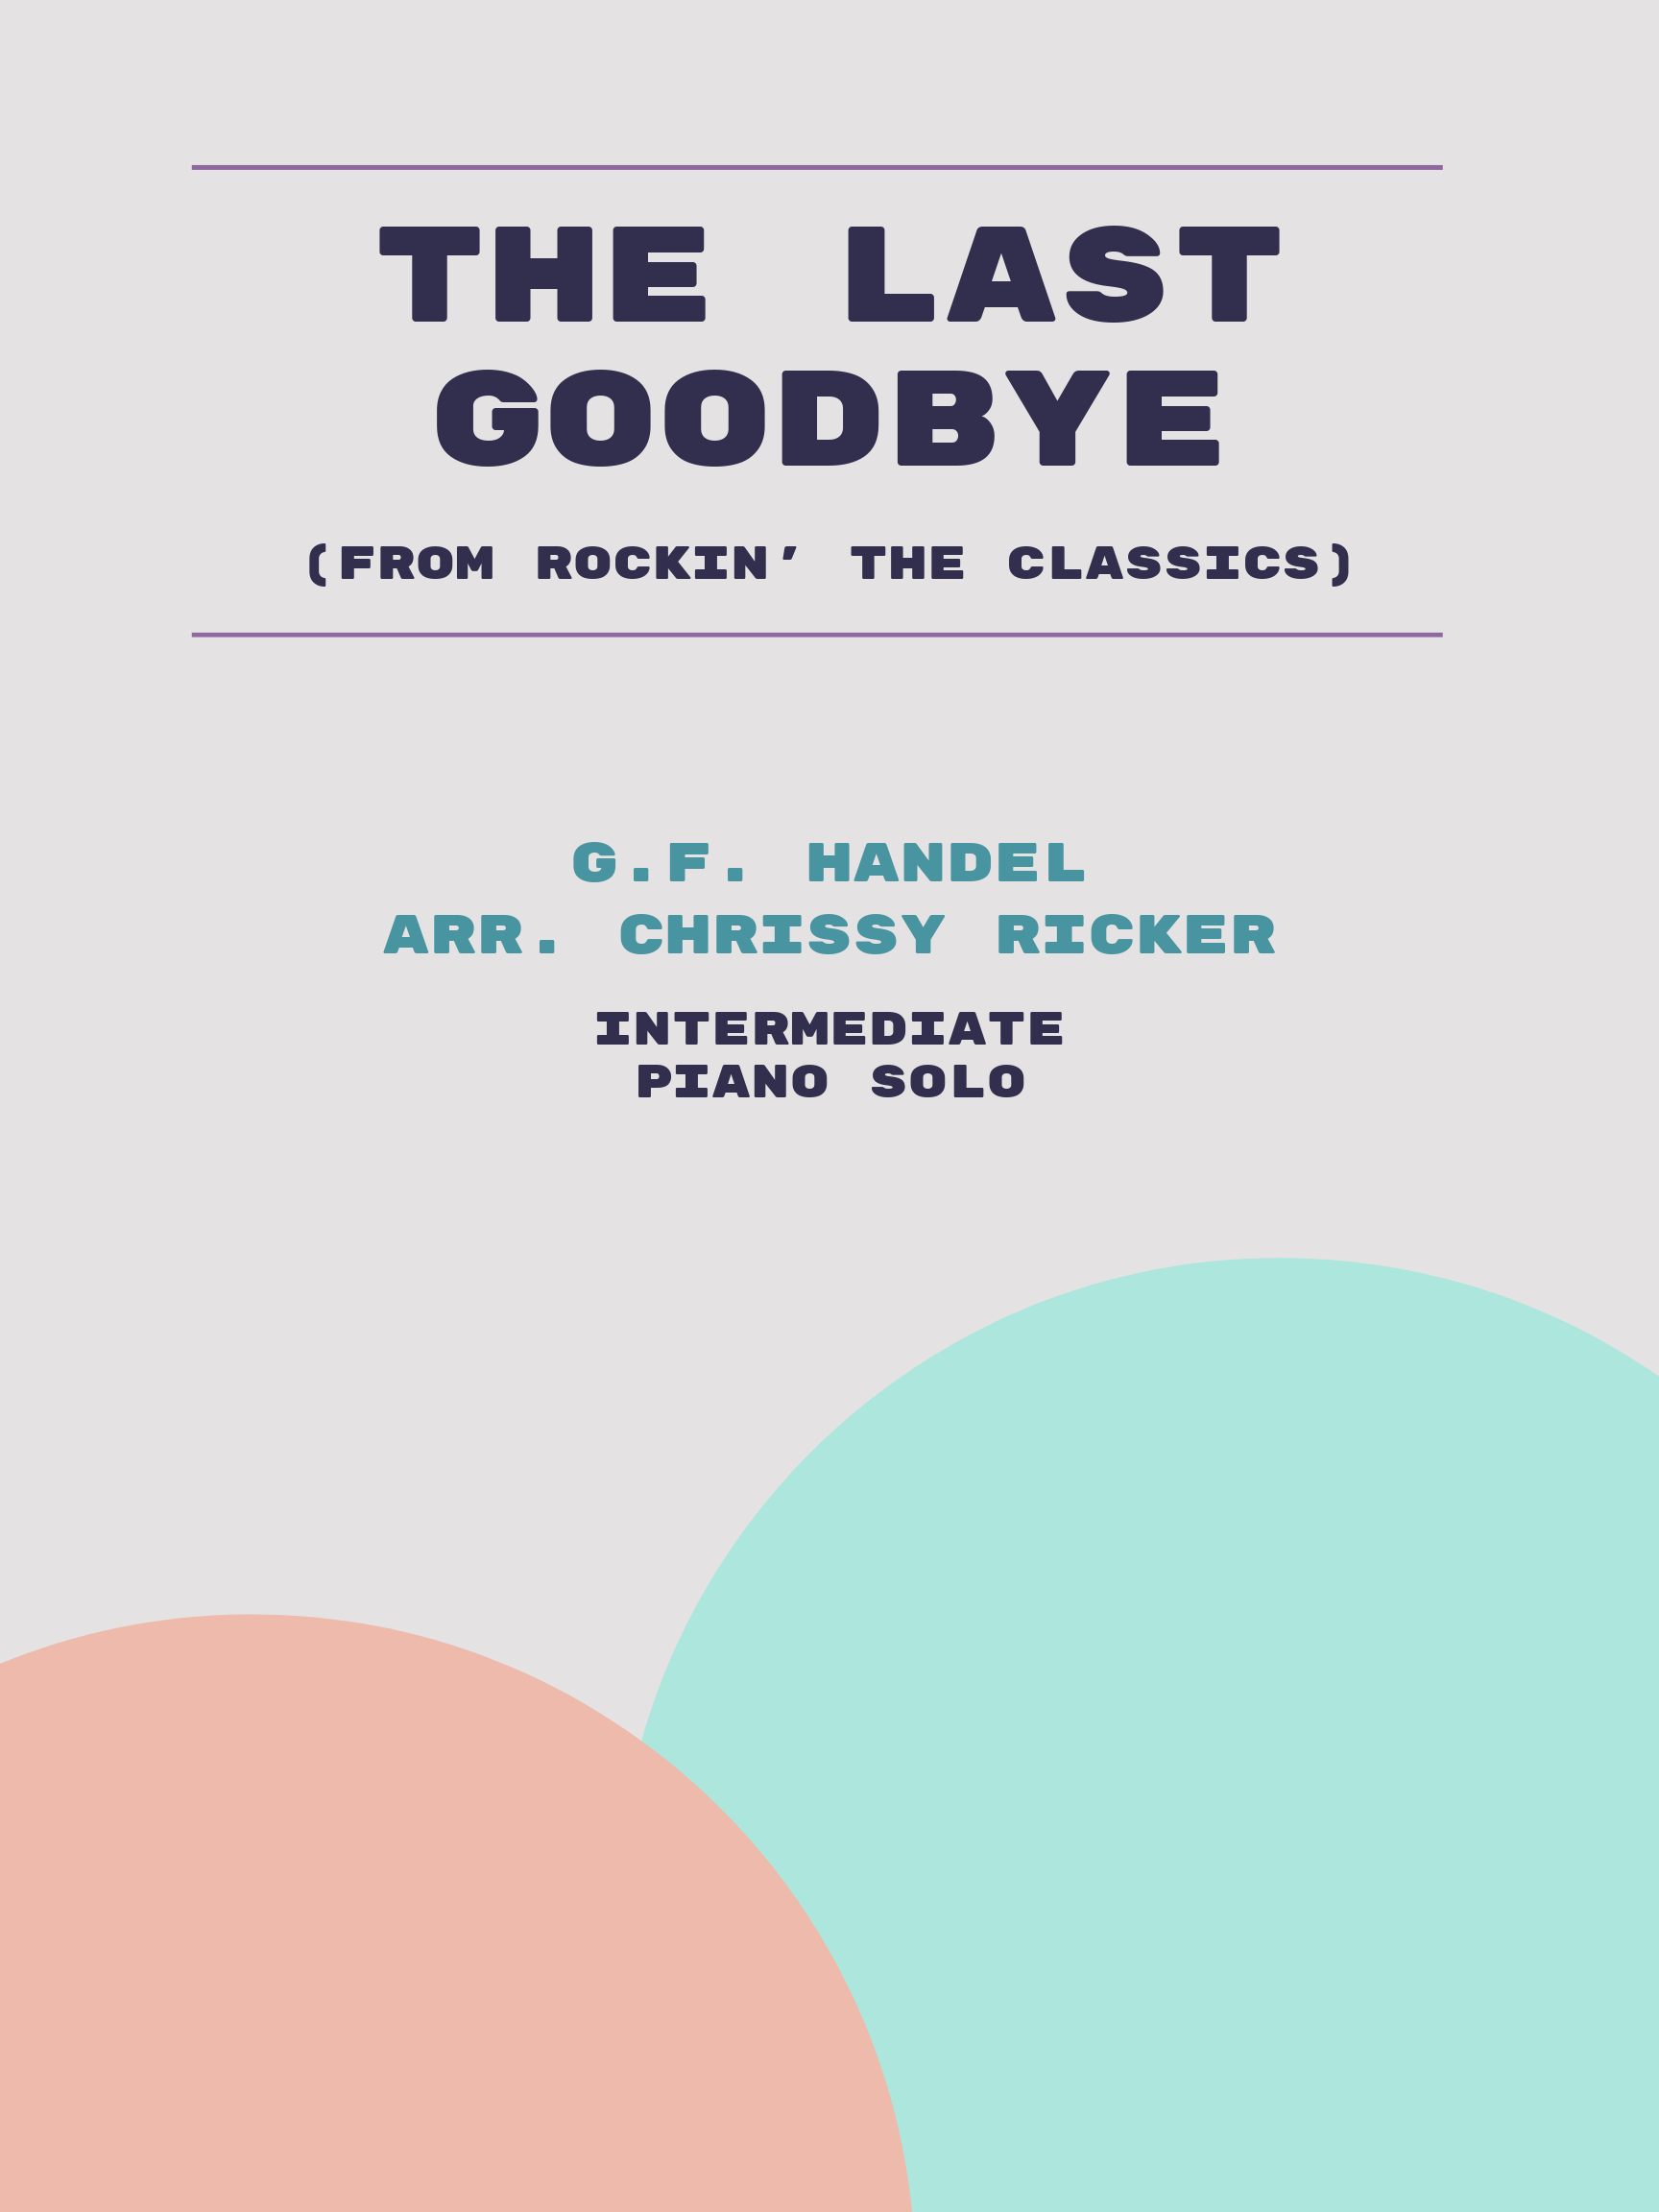 The Last Goodbye by G.F. Handel